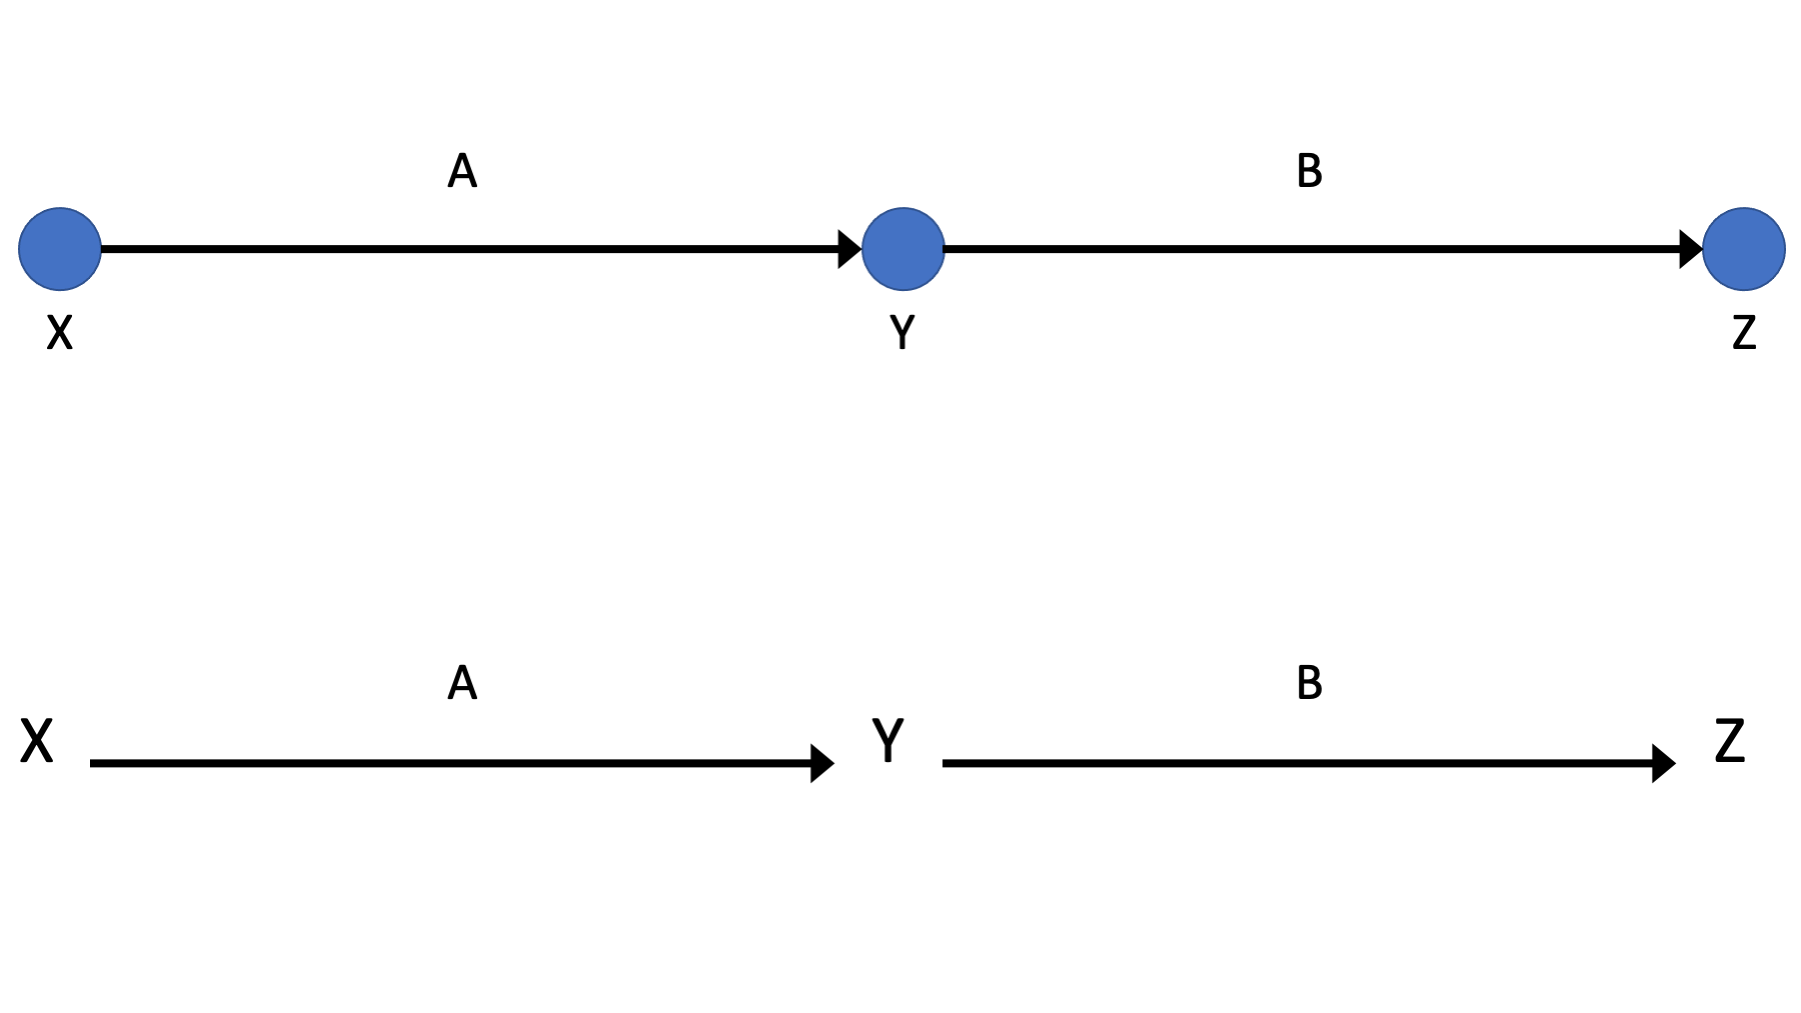 Basic DAG Structures: Nodes and edges.